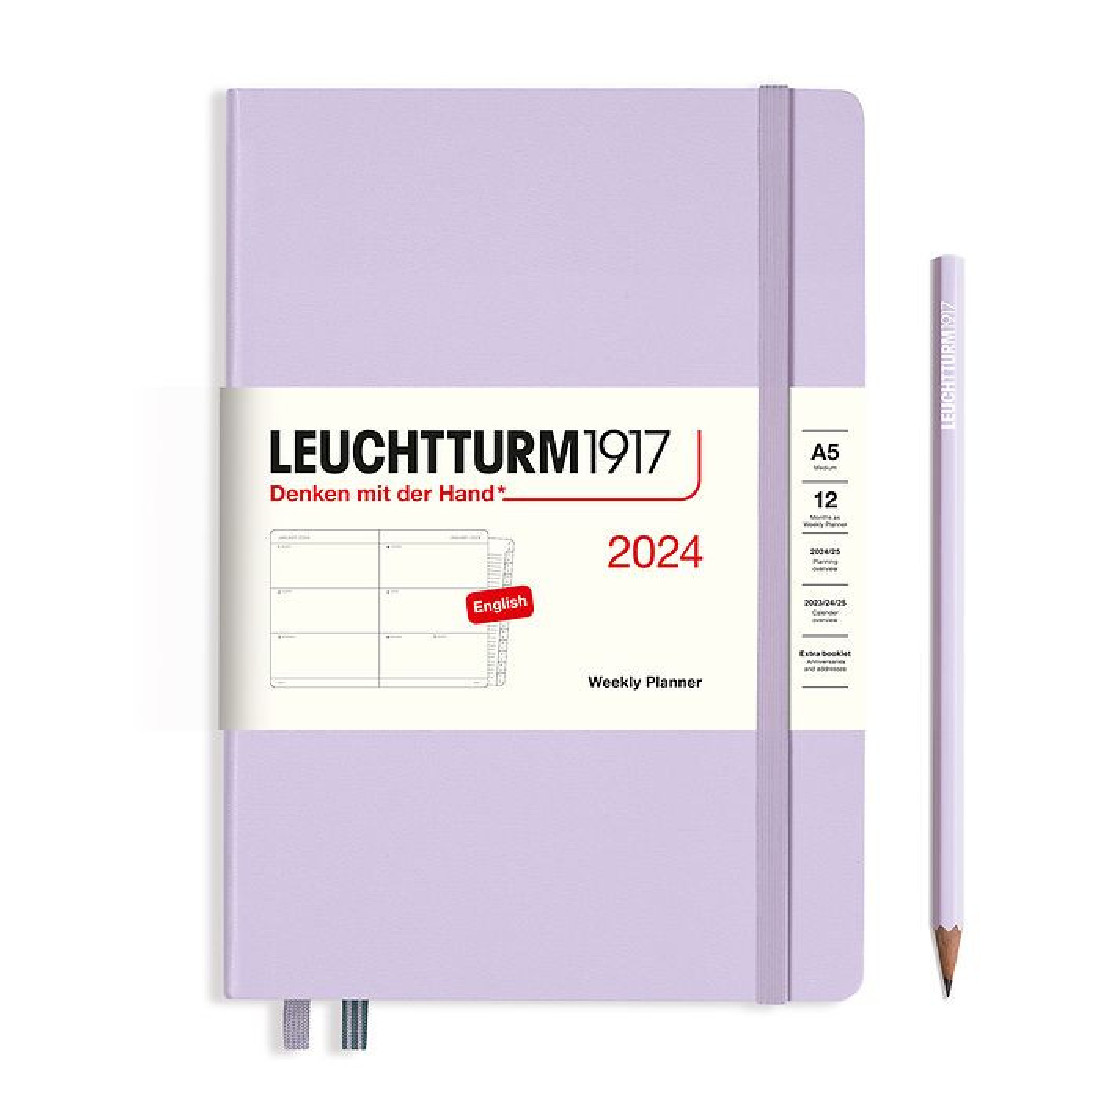 Leuchtturm 1917 Weekly Planner 2024 Lilac Medium A5 Hard Cover